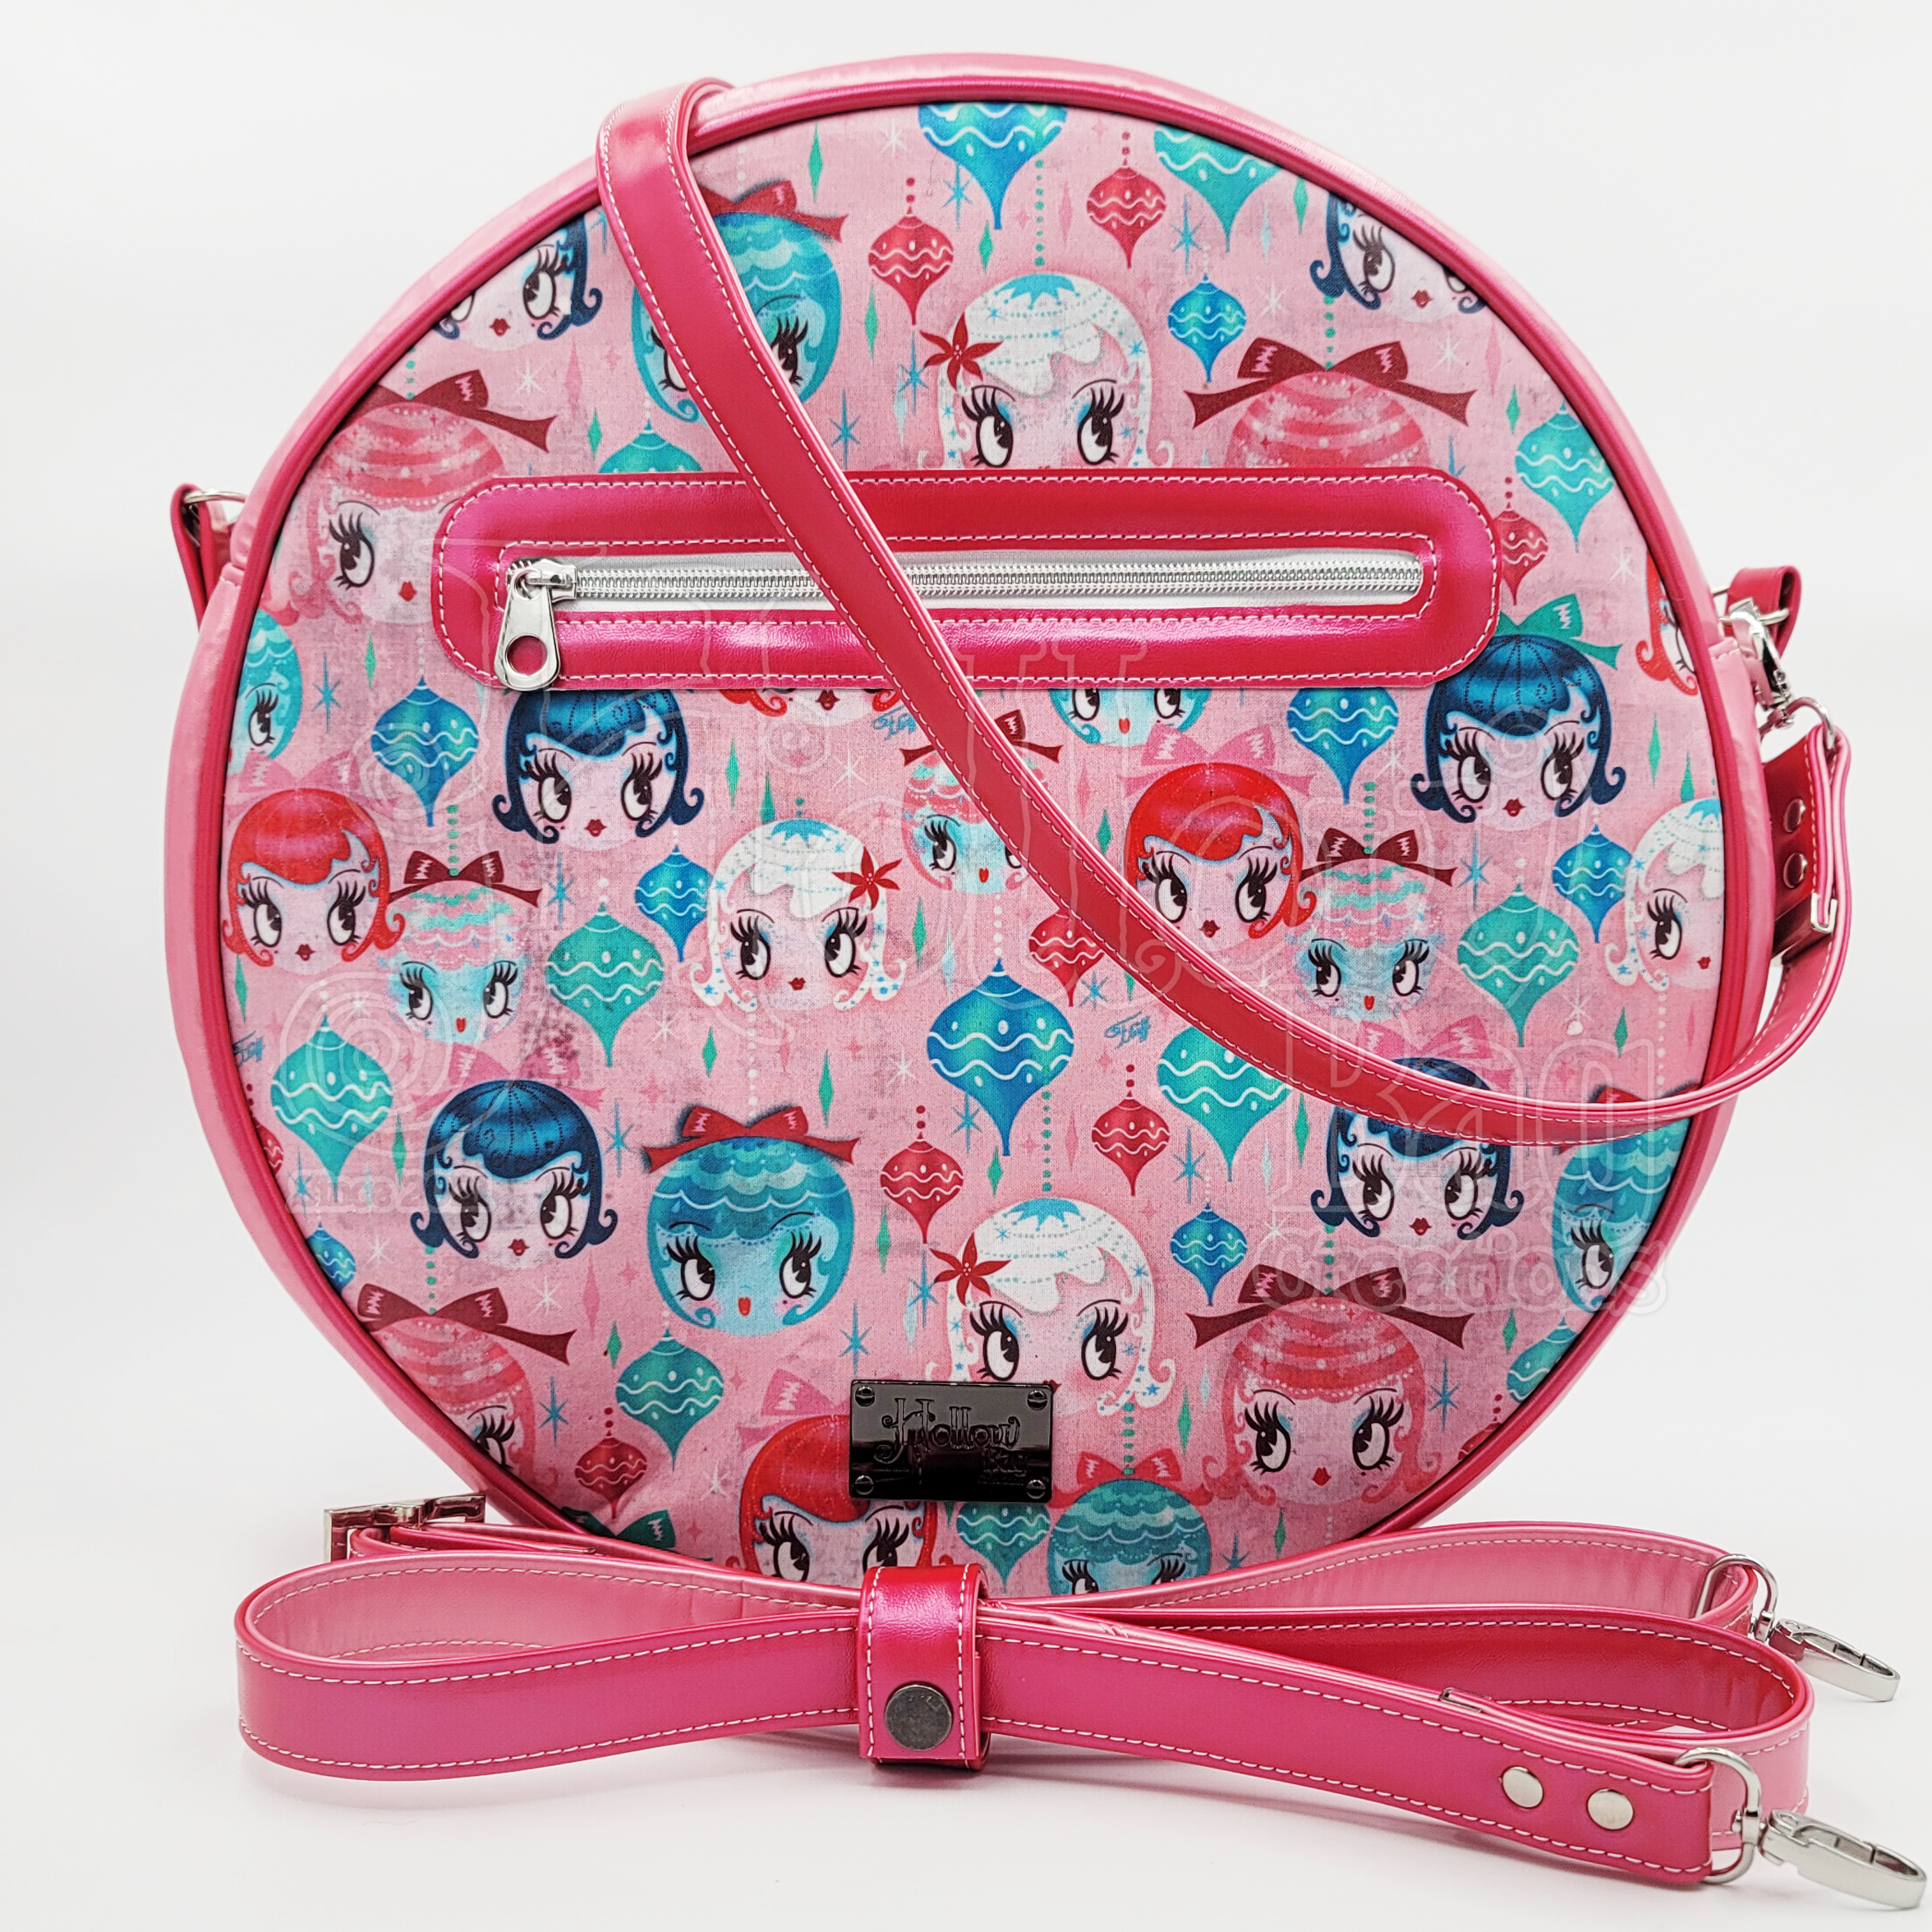 Juicy Couture Y2K Neon Pink Clear Tote Bag